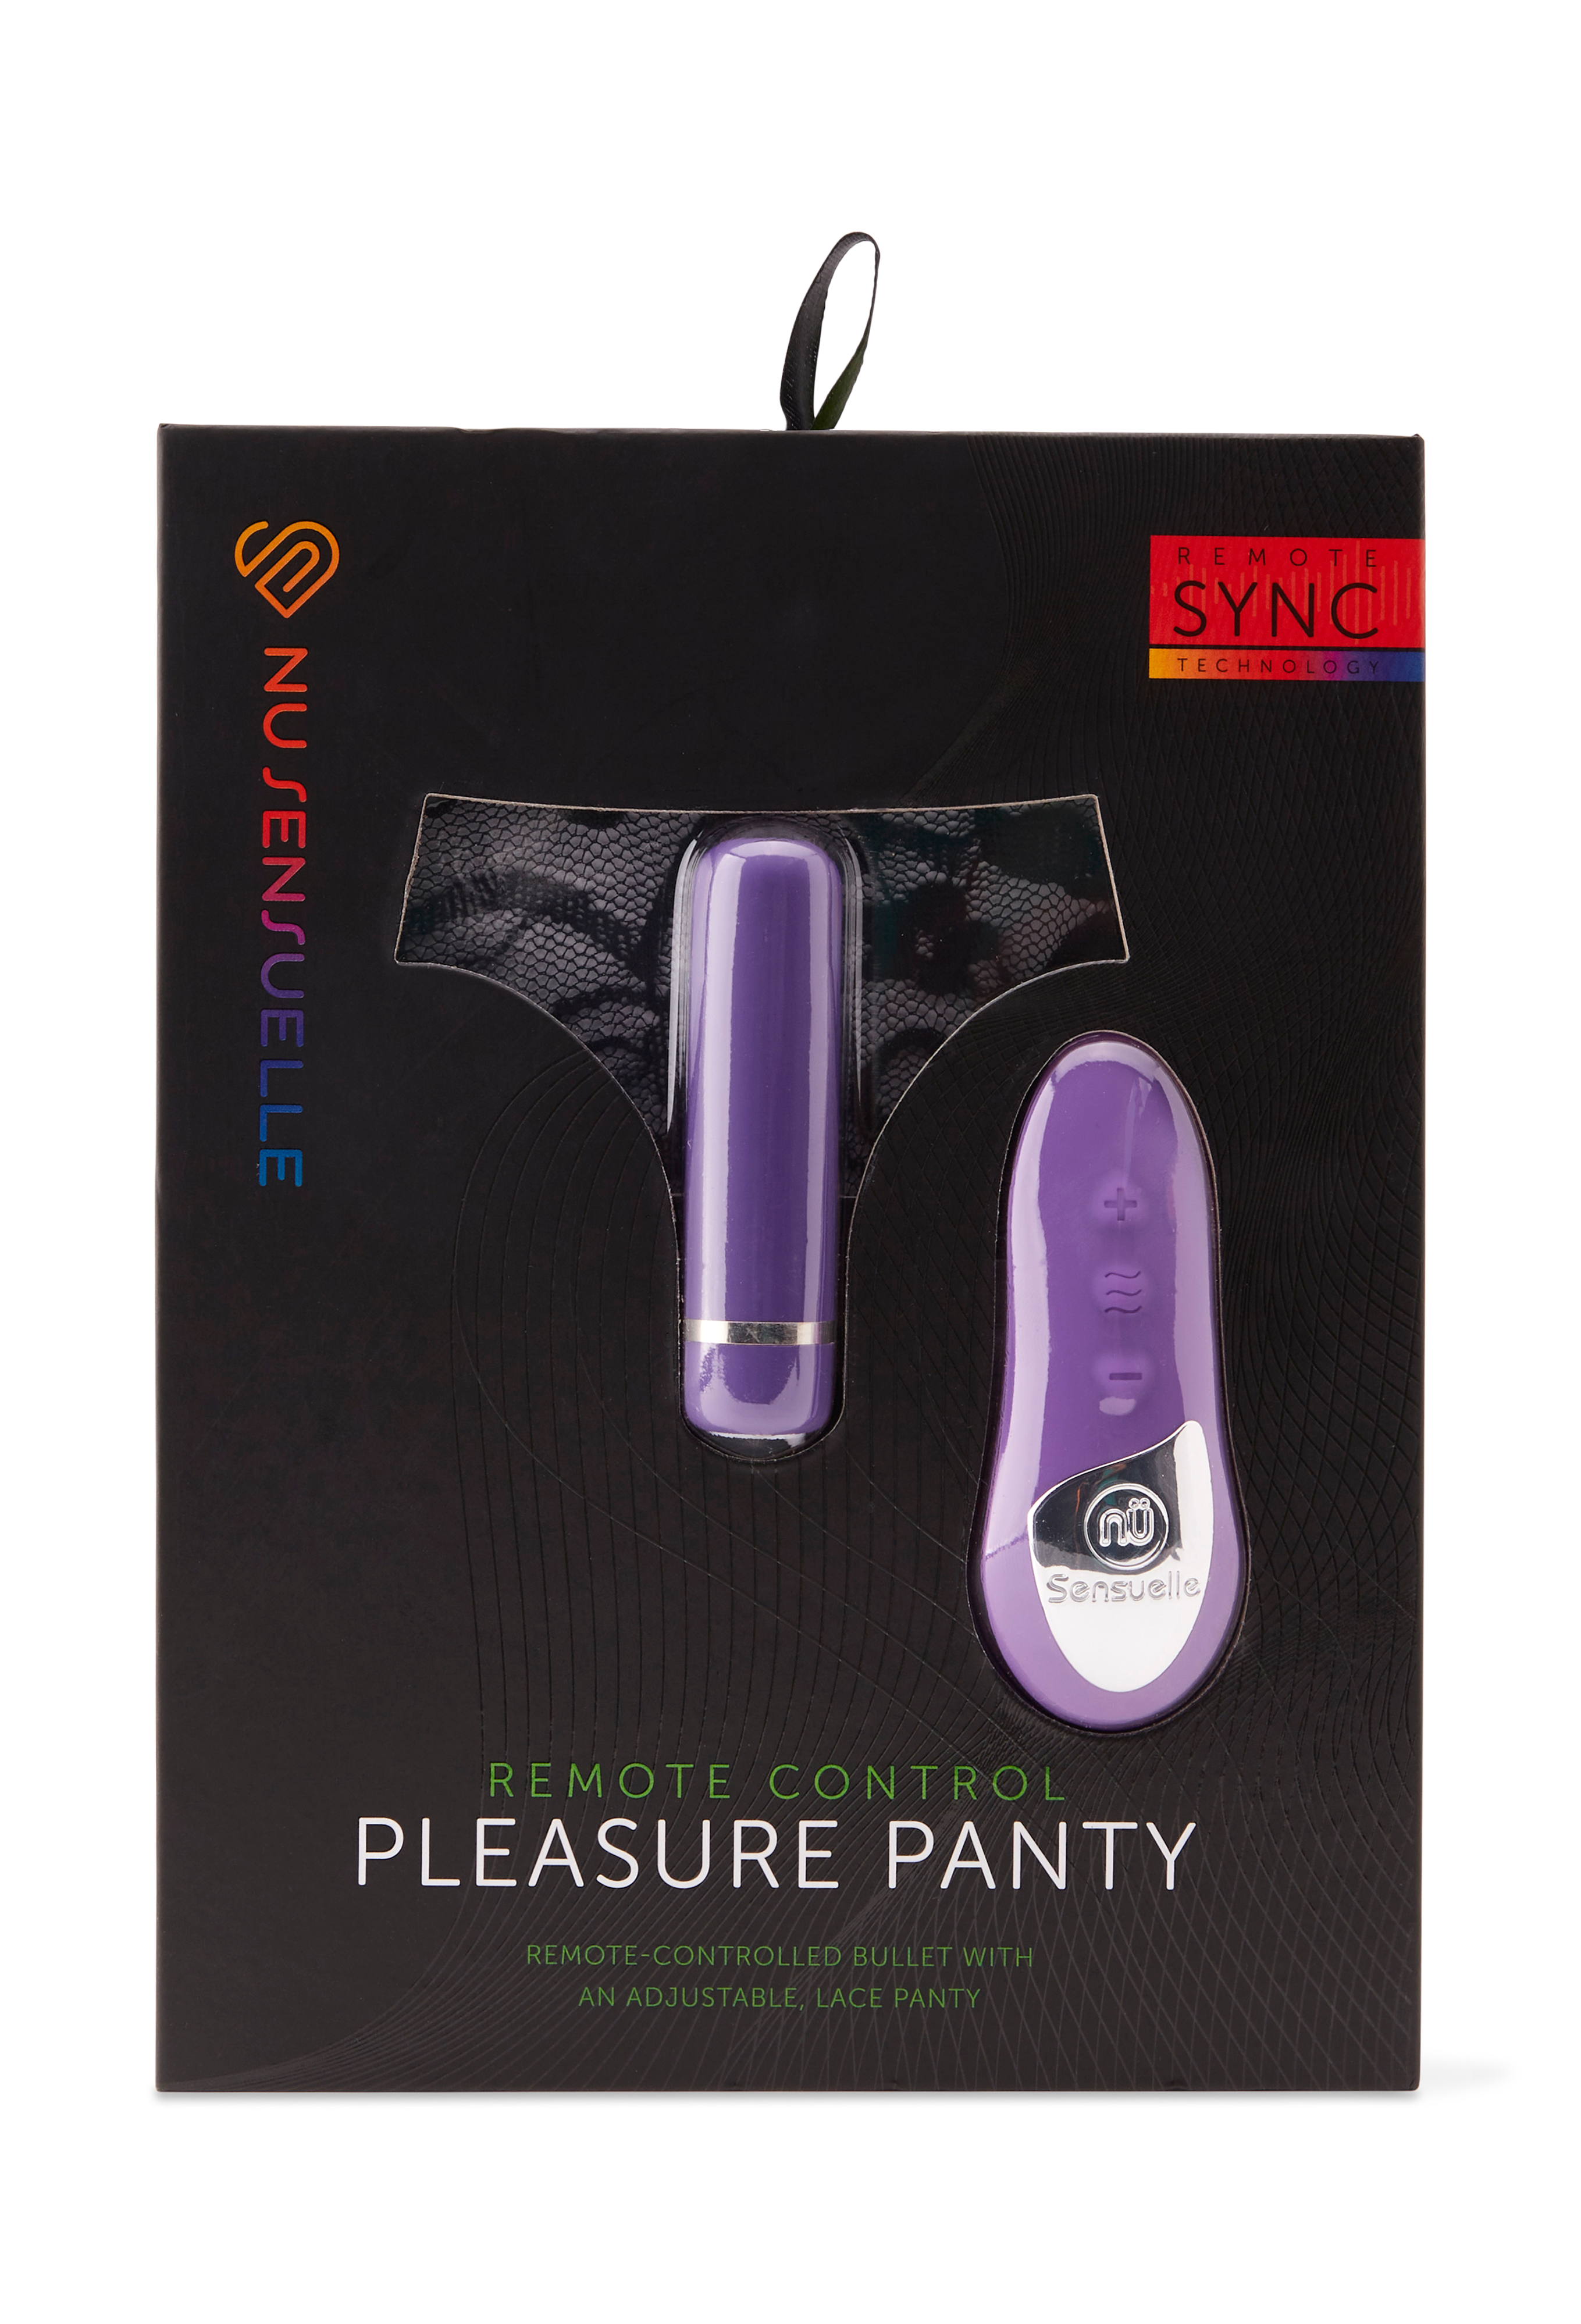 Nu Sensuelle Pleasure Panty Vibrator - XOXTOYS